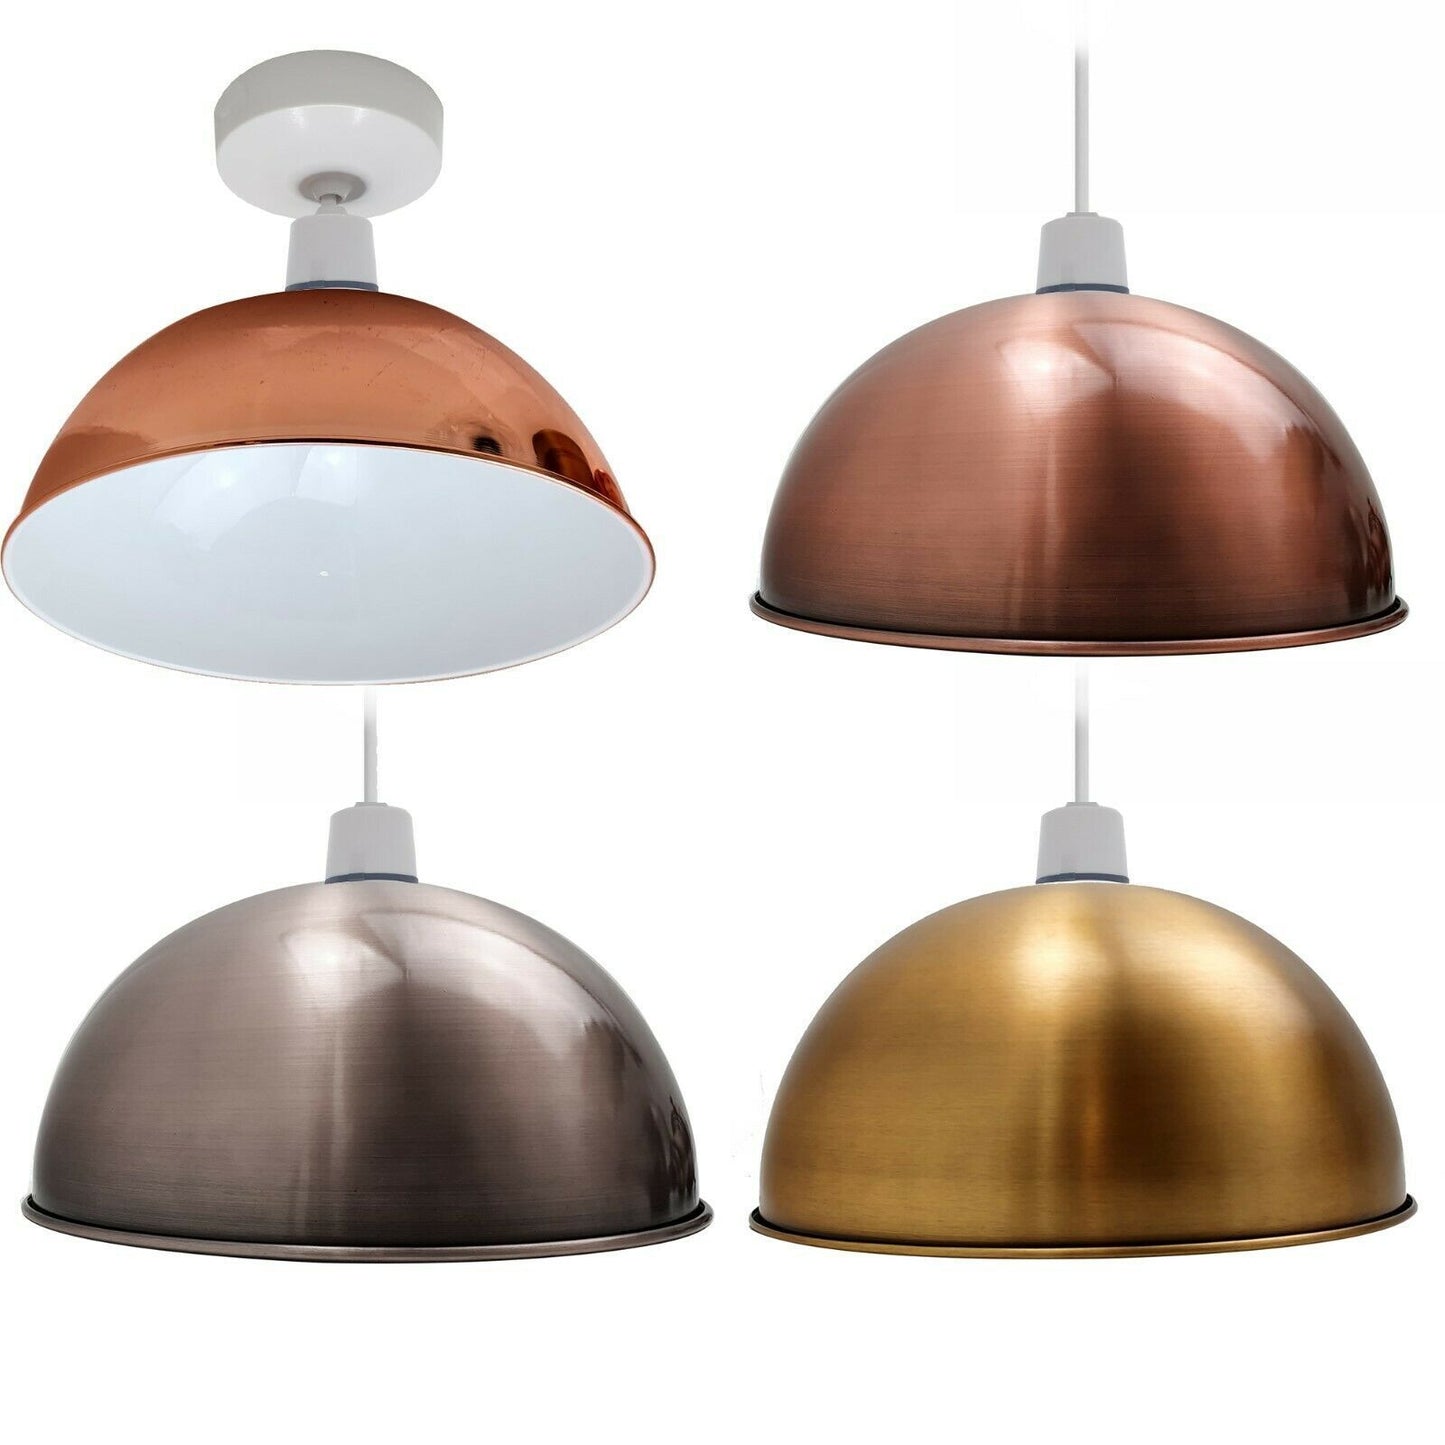 Dome shape metal lamp shade